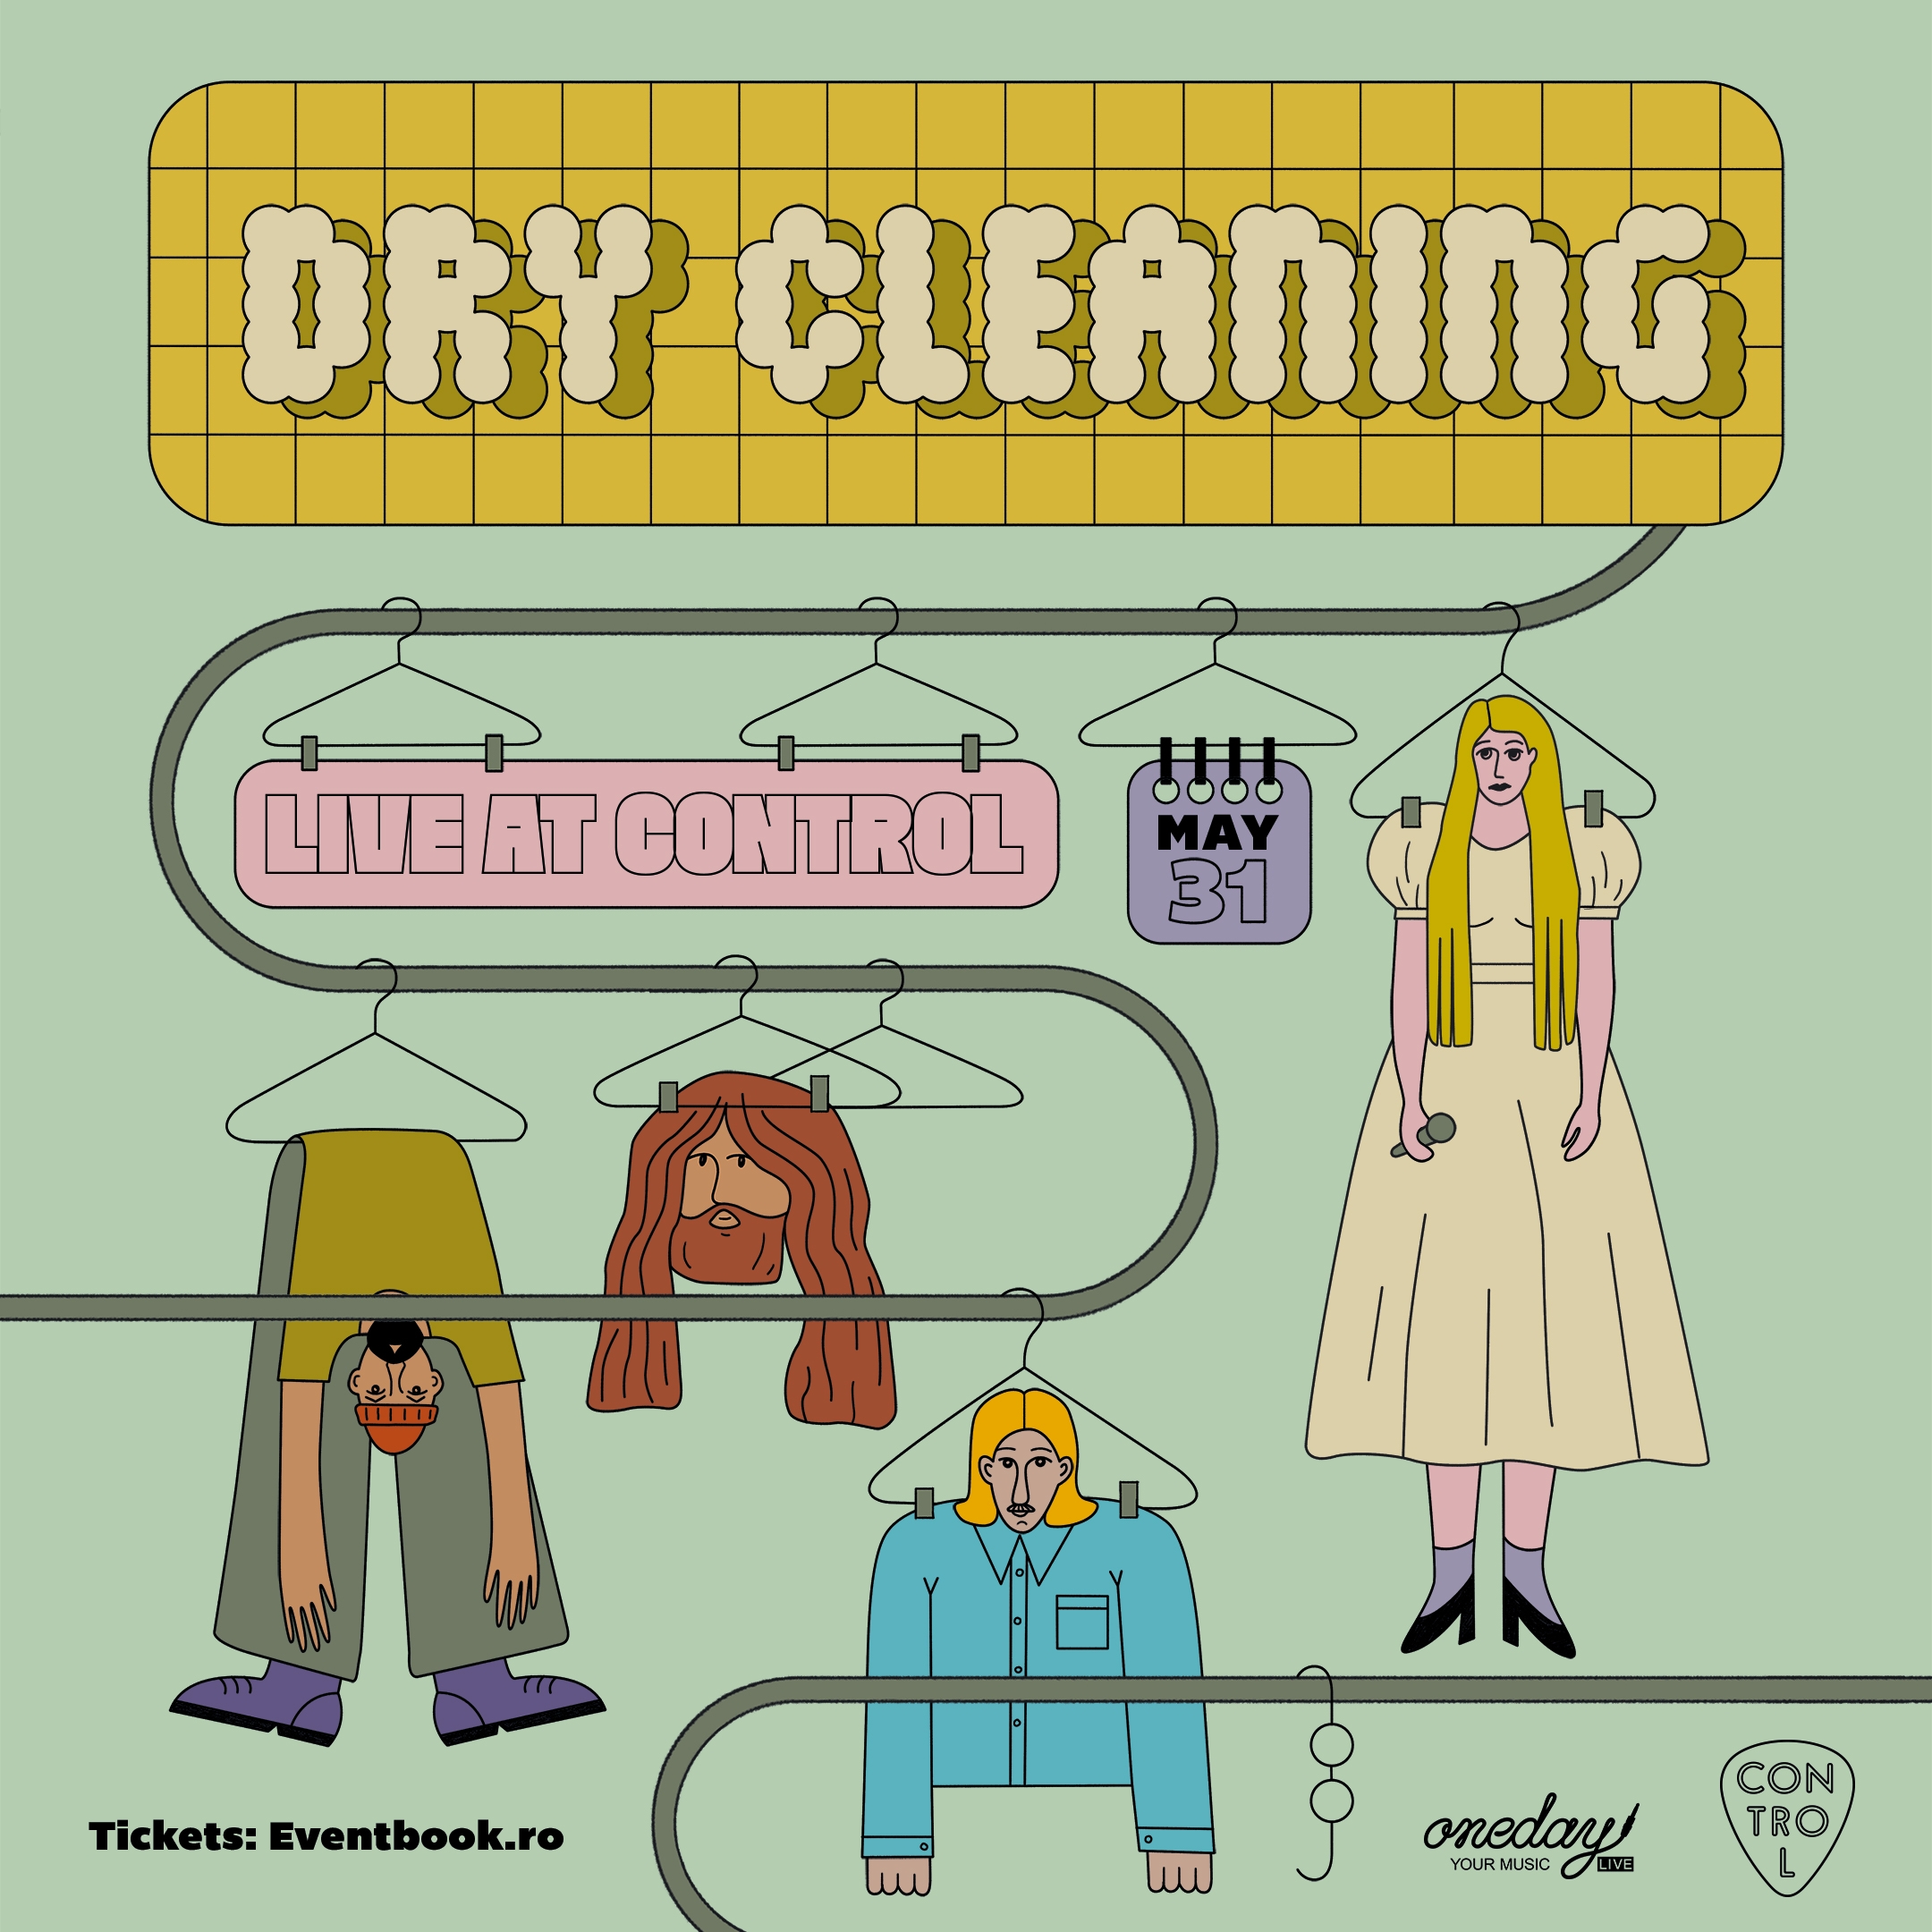 Dry Cleaning Control Club Bucharest